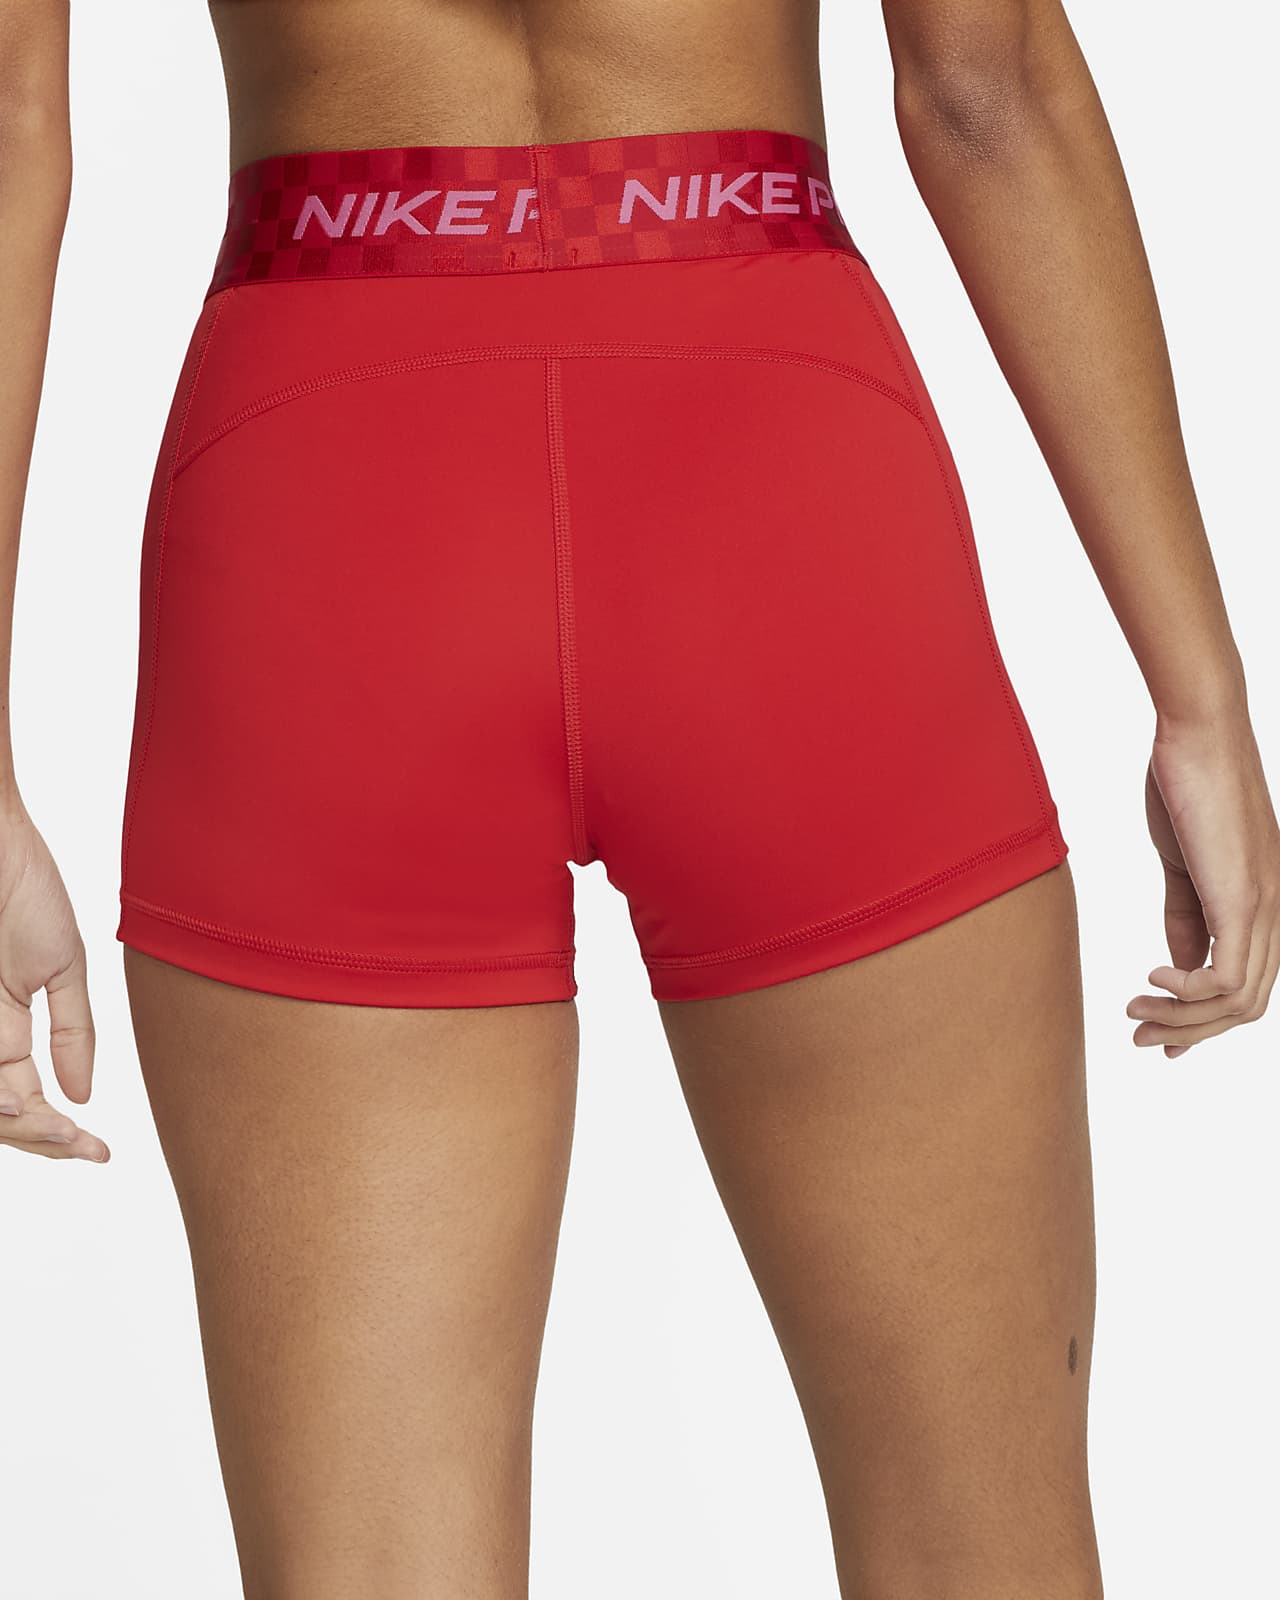 Nike Pro Training 3 Shorts  Nike pro outfit, Teen fashion